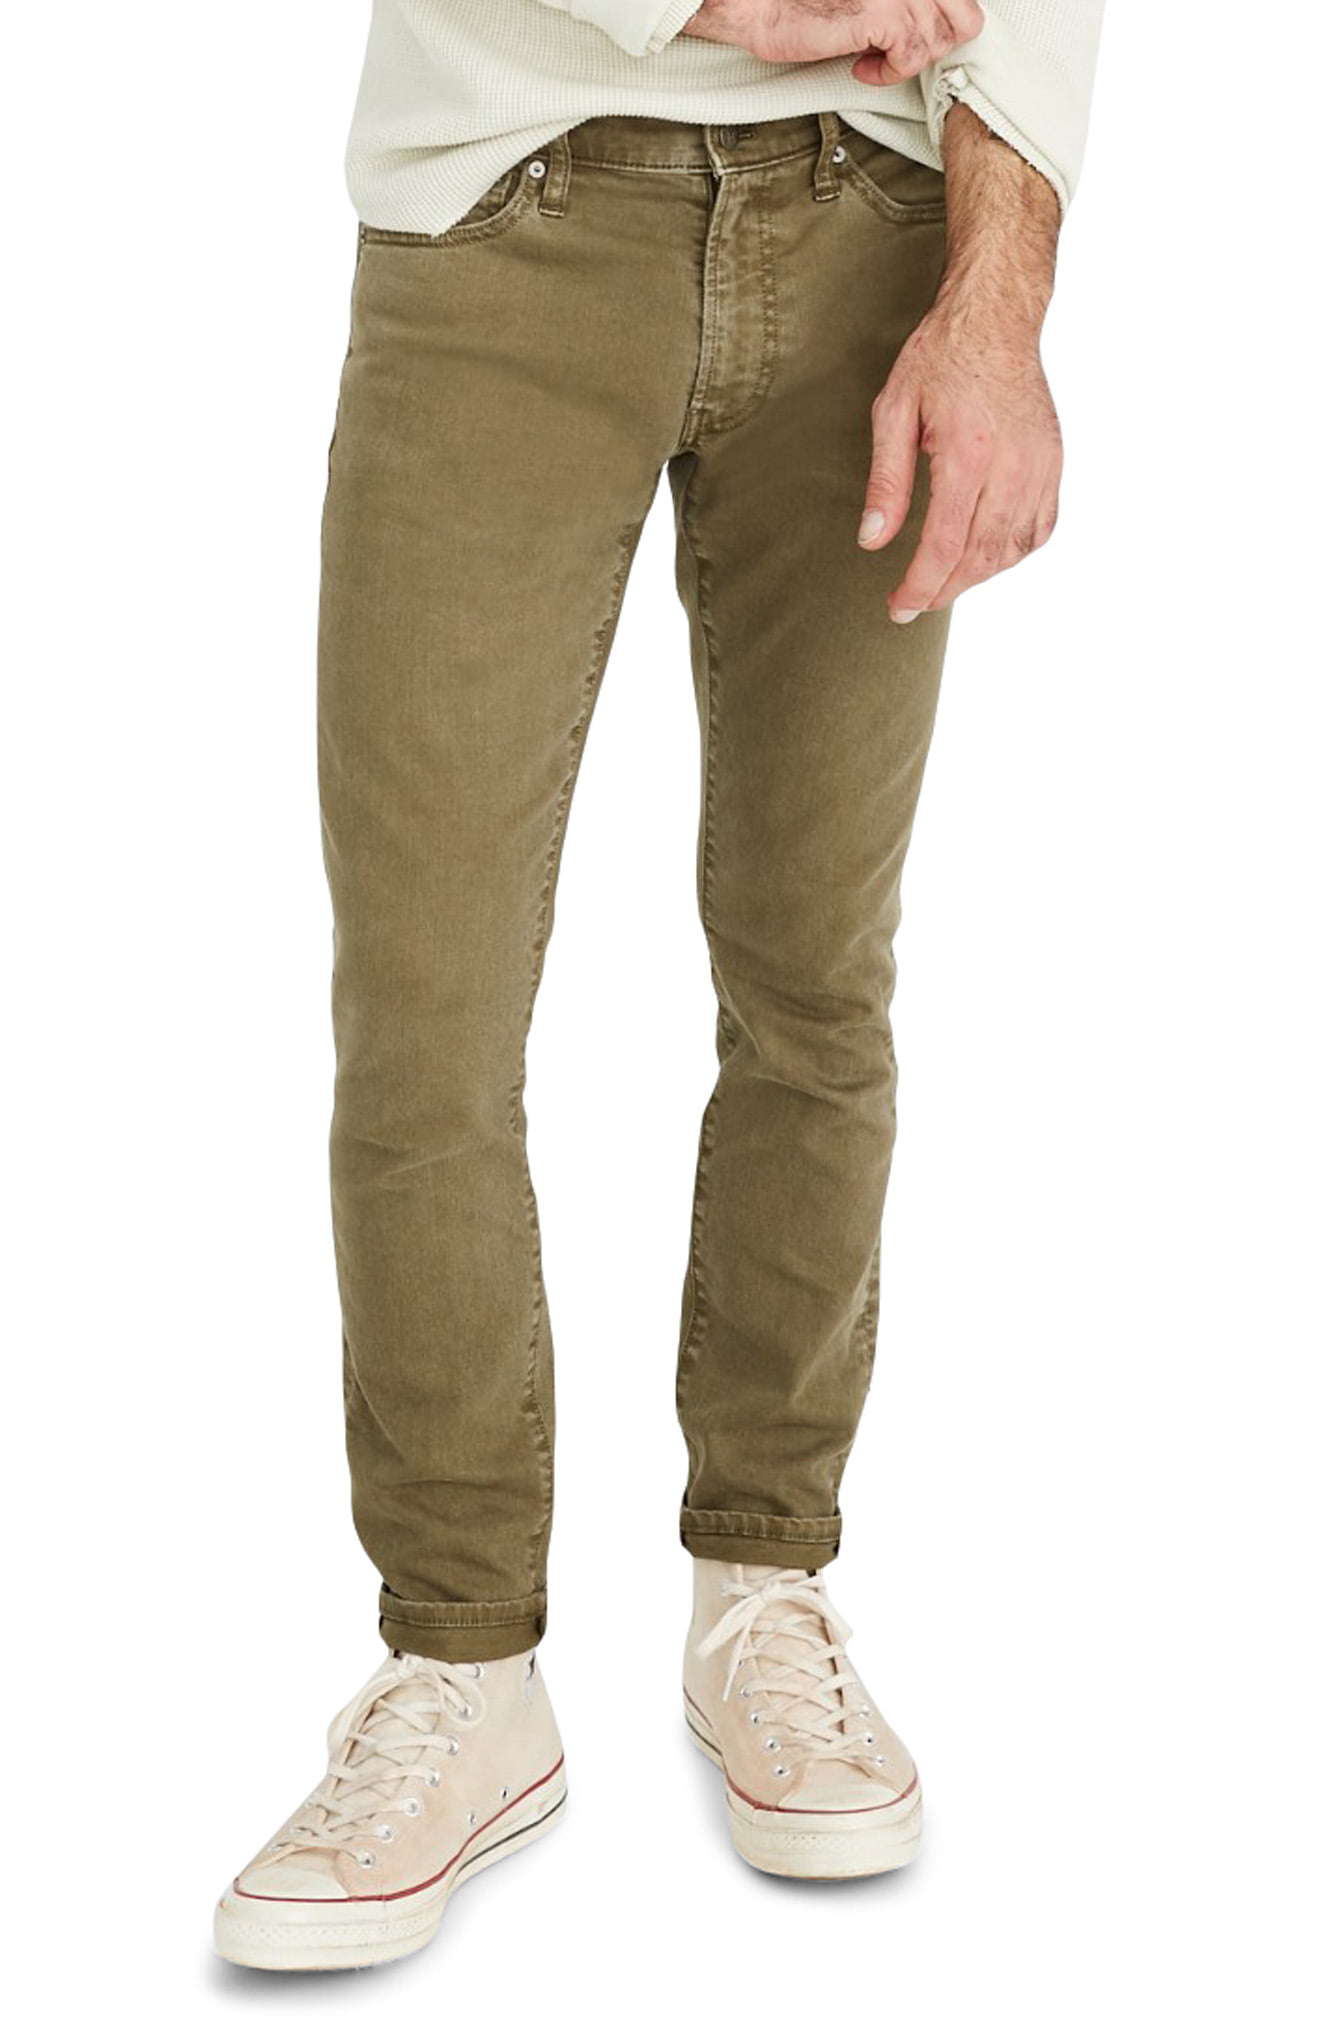 Men’s Madewell Garment Dyed Skinny Everyday Flex Jeans, Size 28 x 32